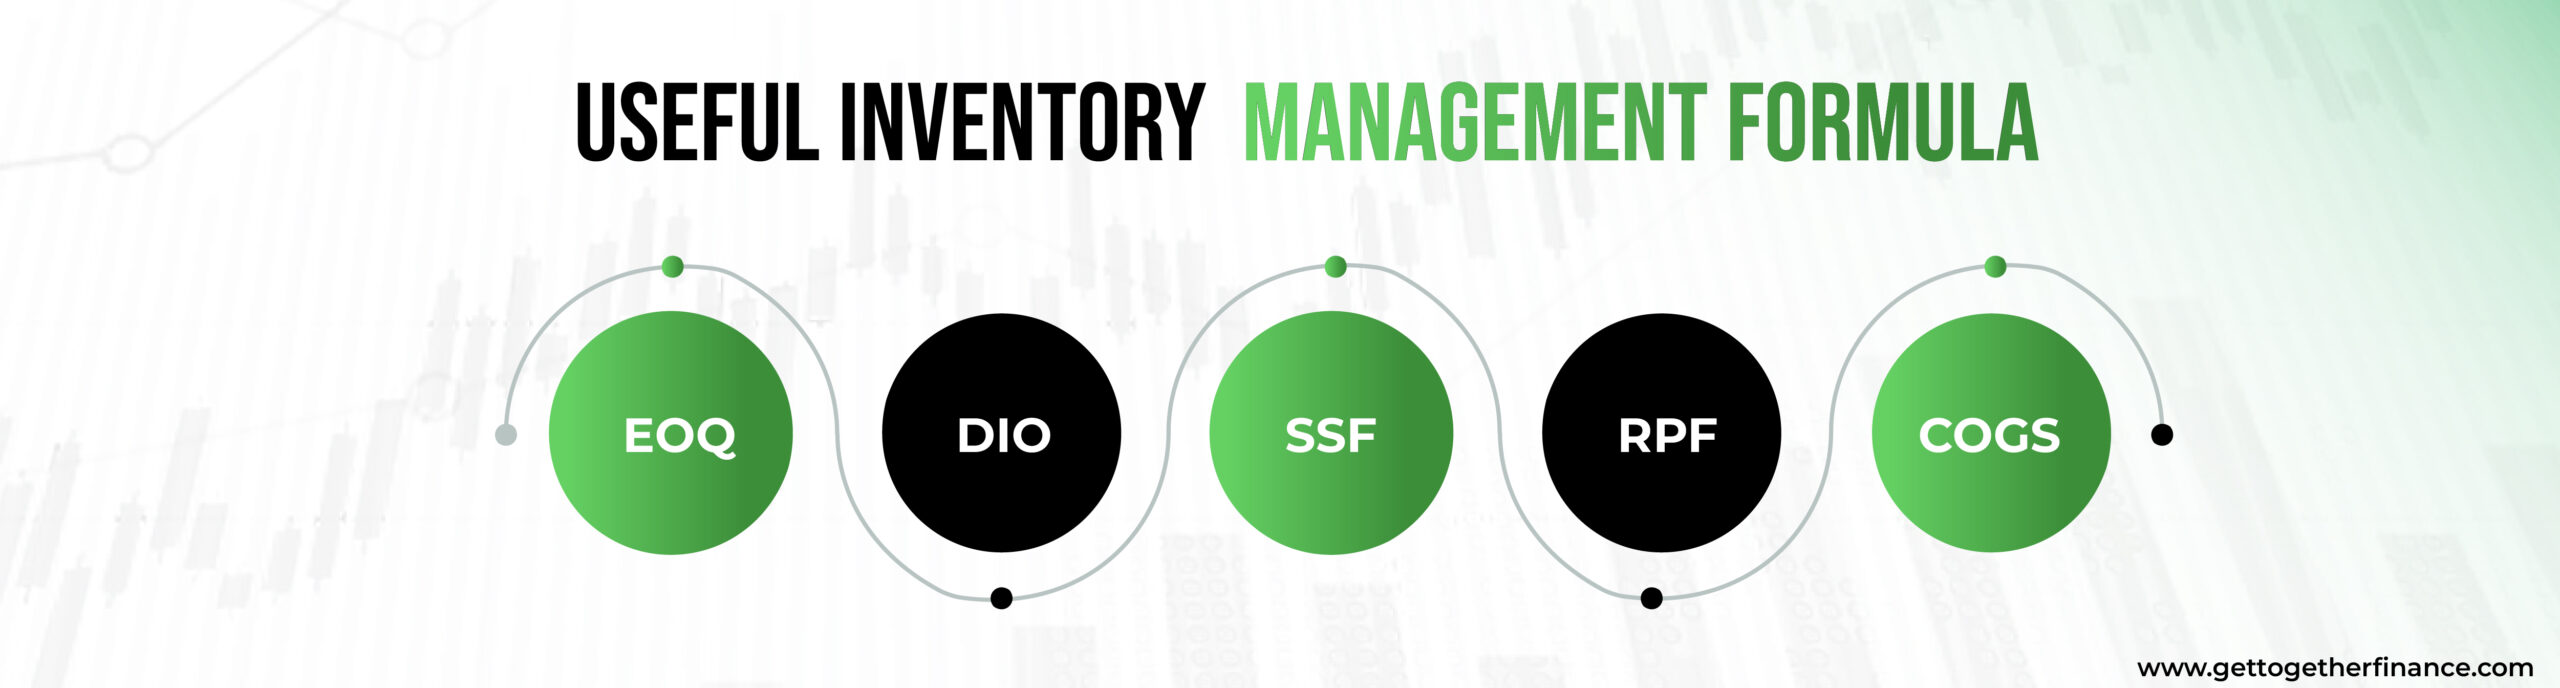 inventory management formula